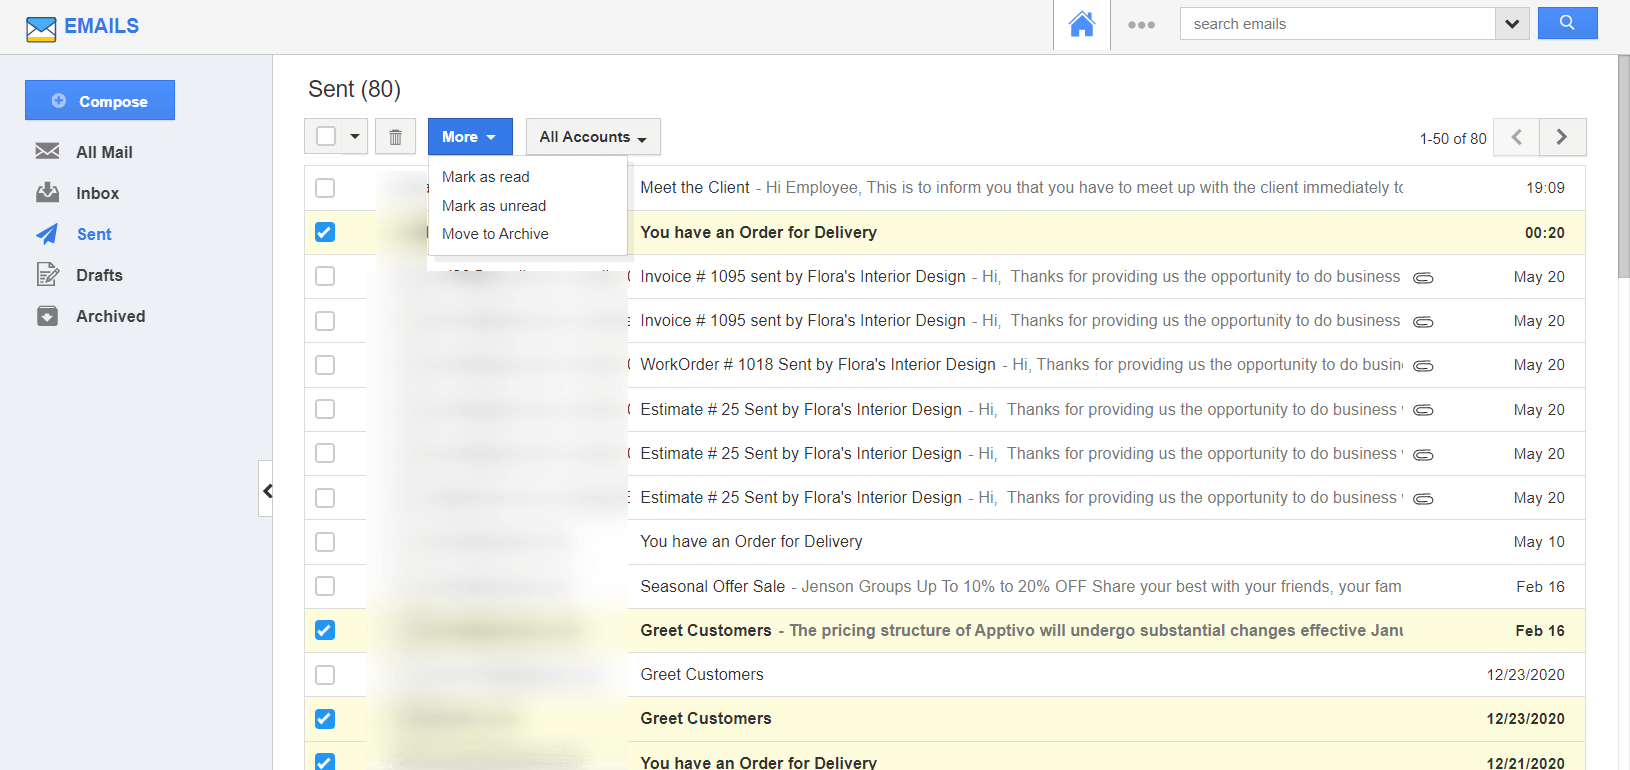 EmailsApp-MoreDropdown.png